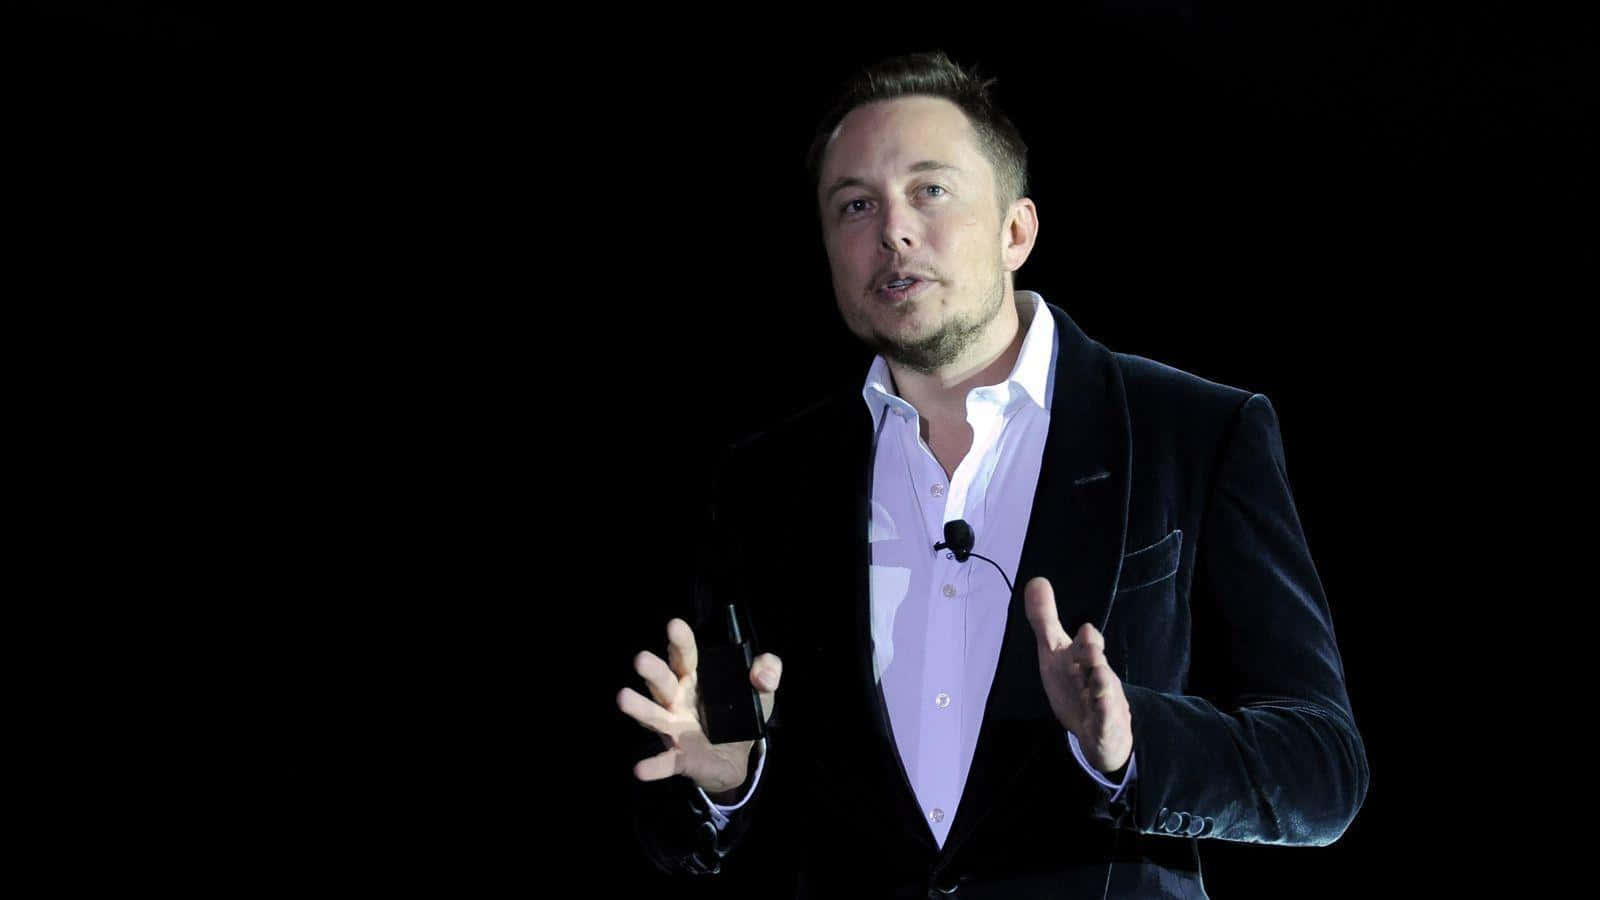 Elon Musk - The Innovator